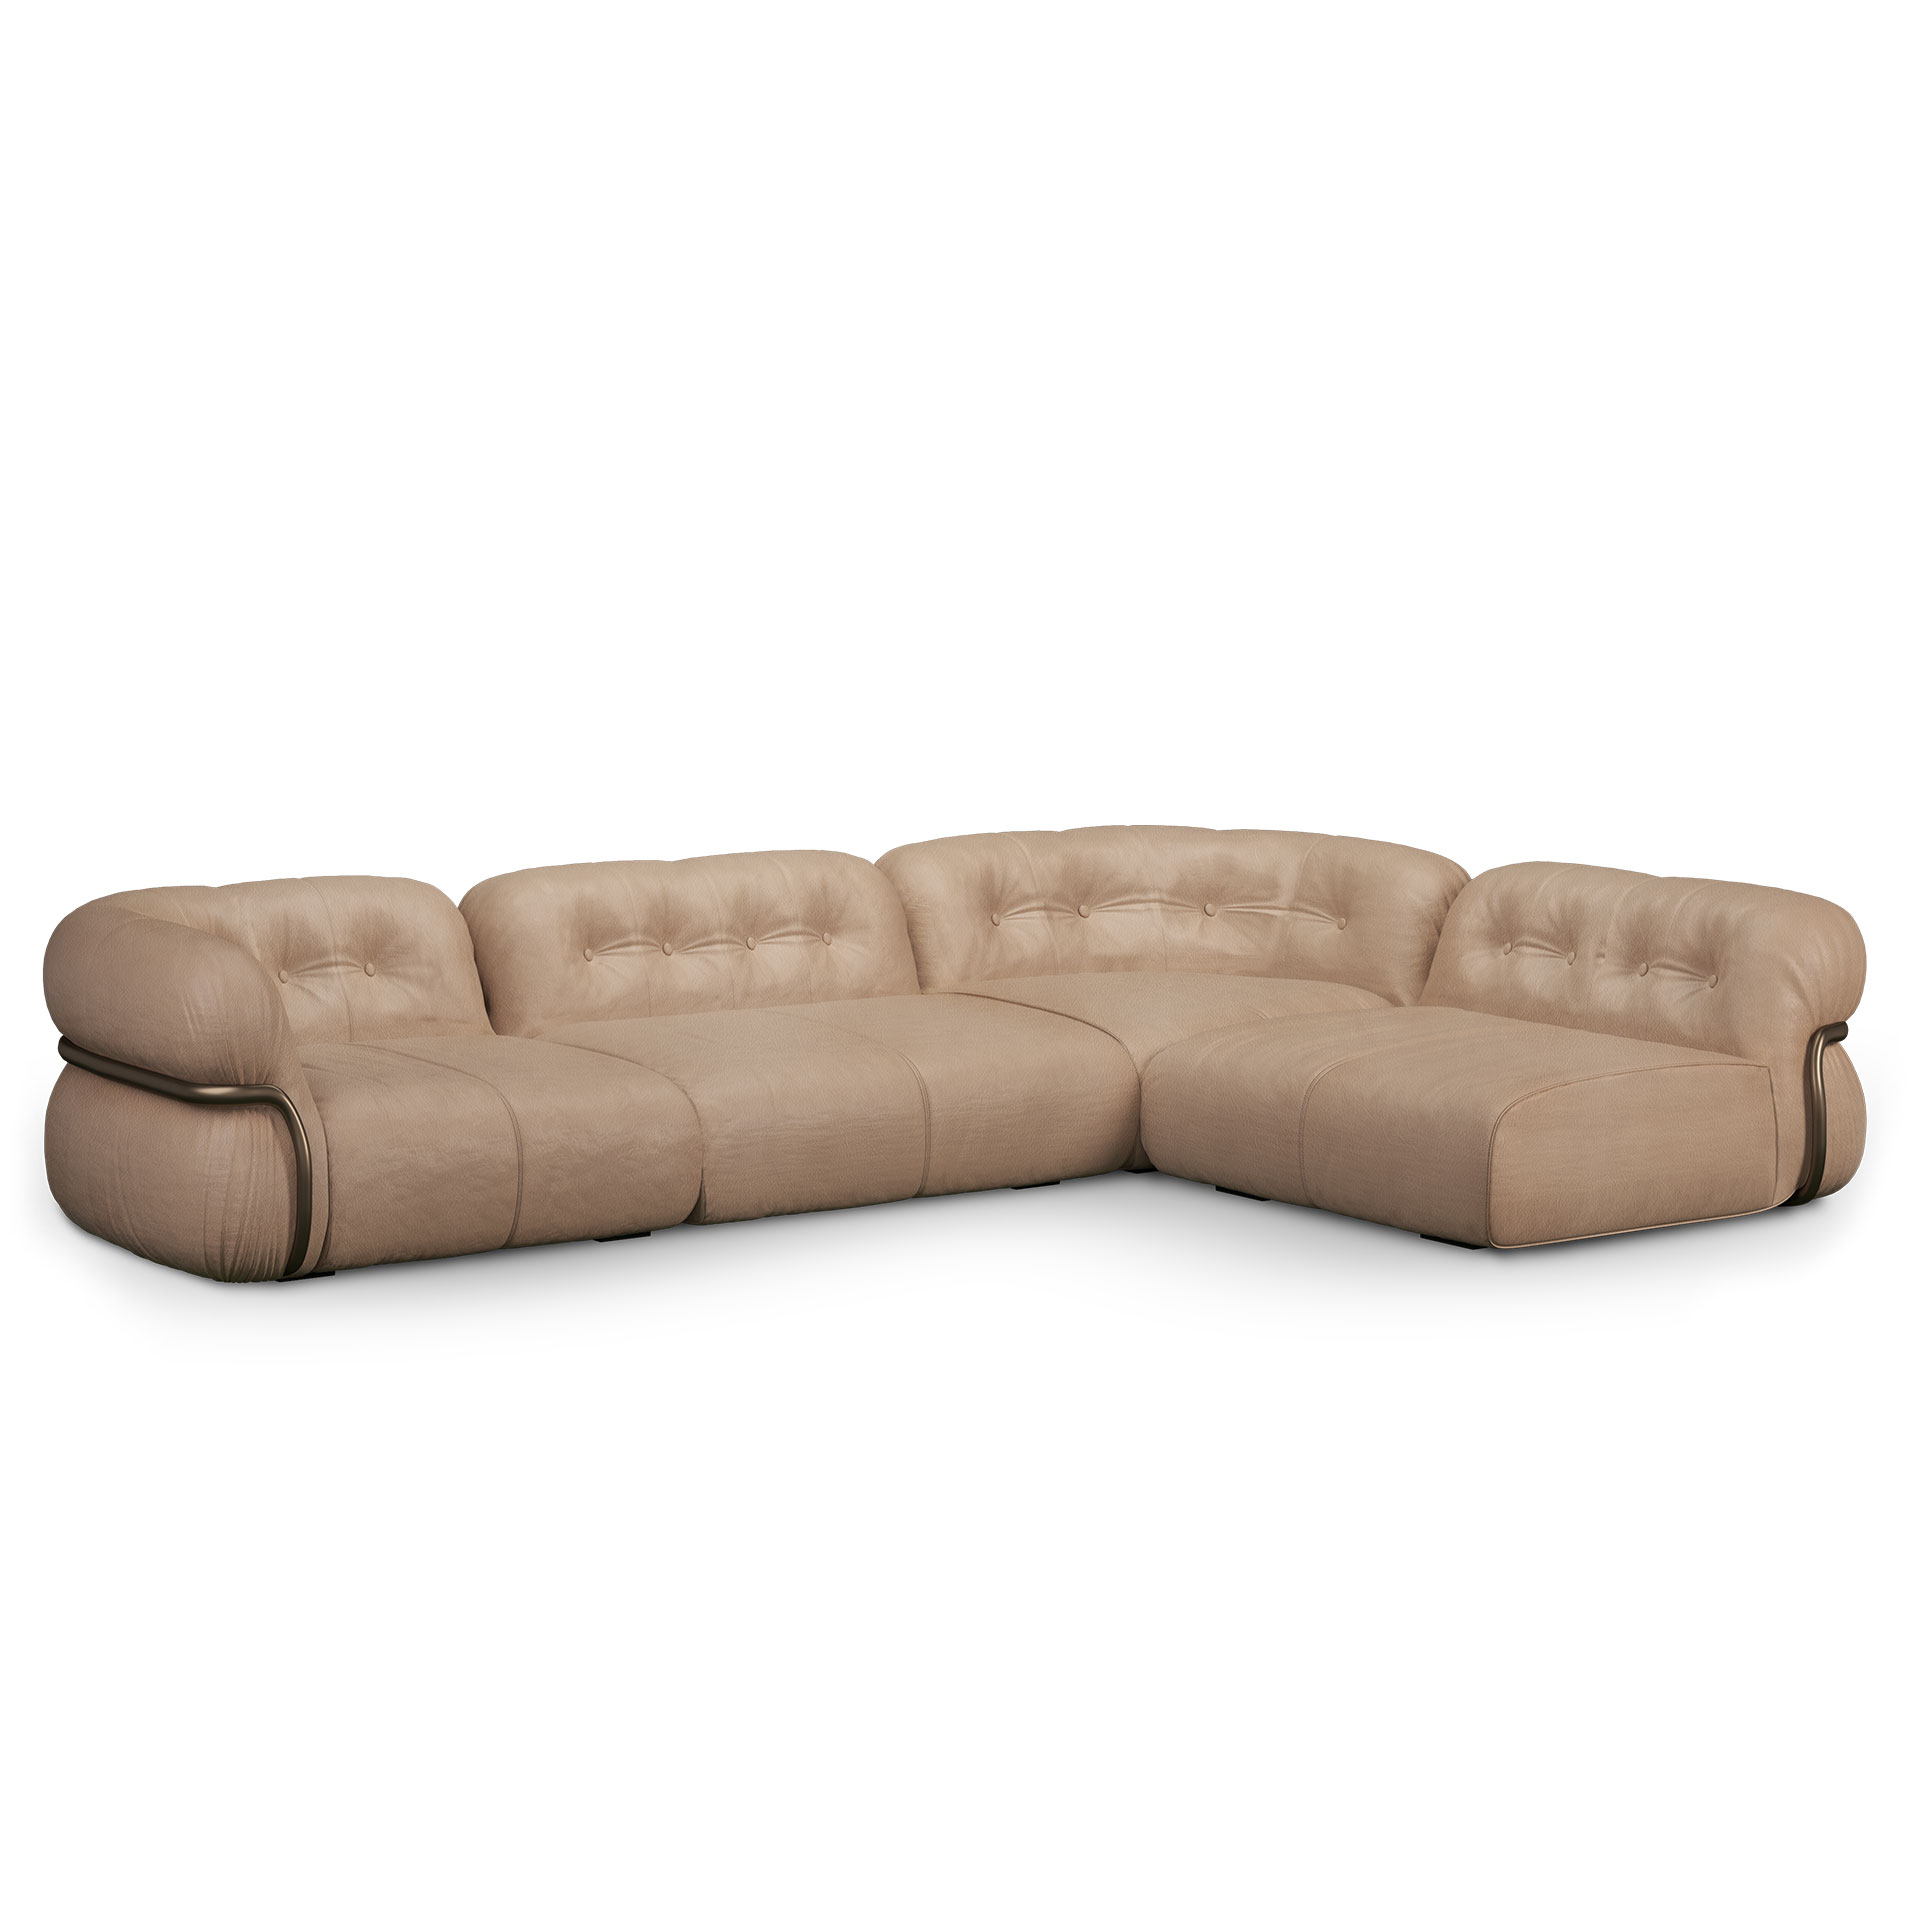 Joshua modular sofa